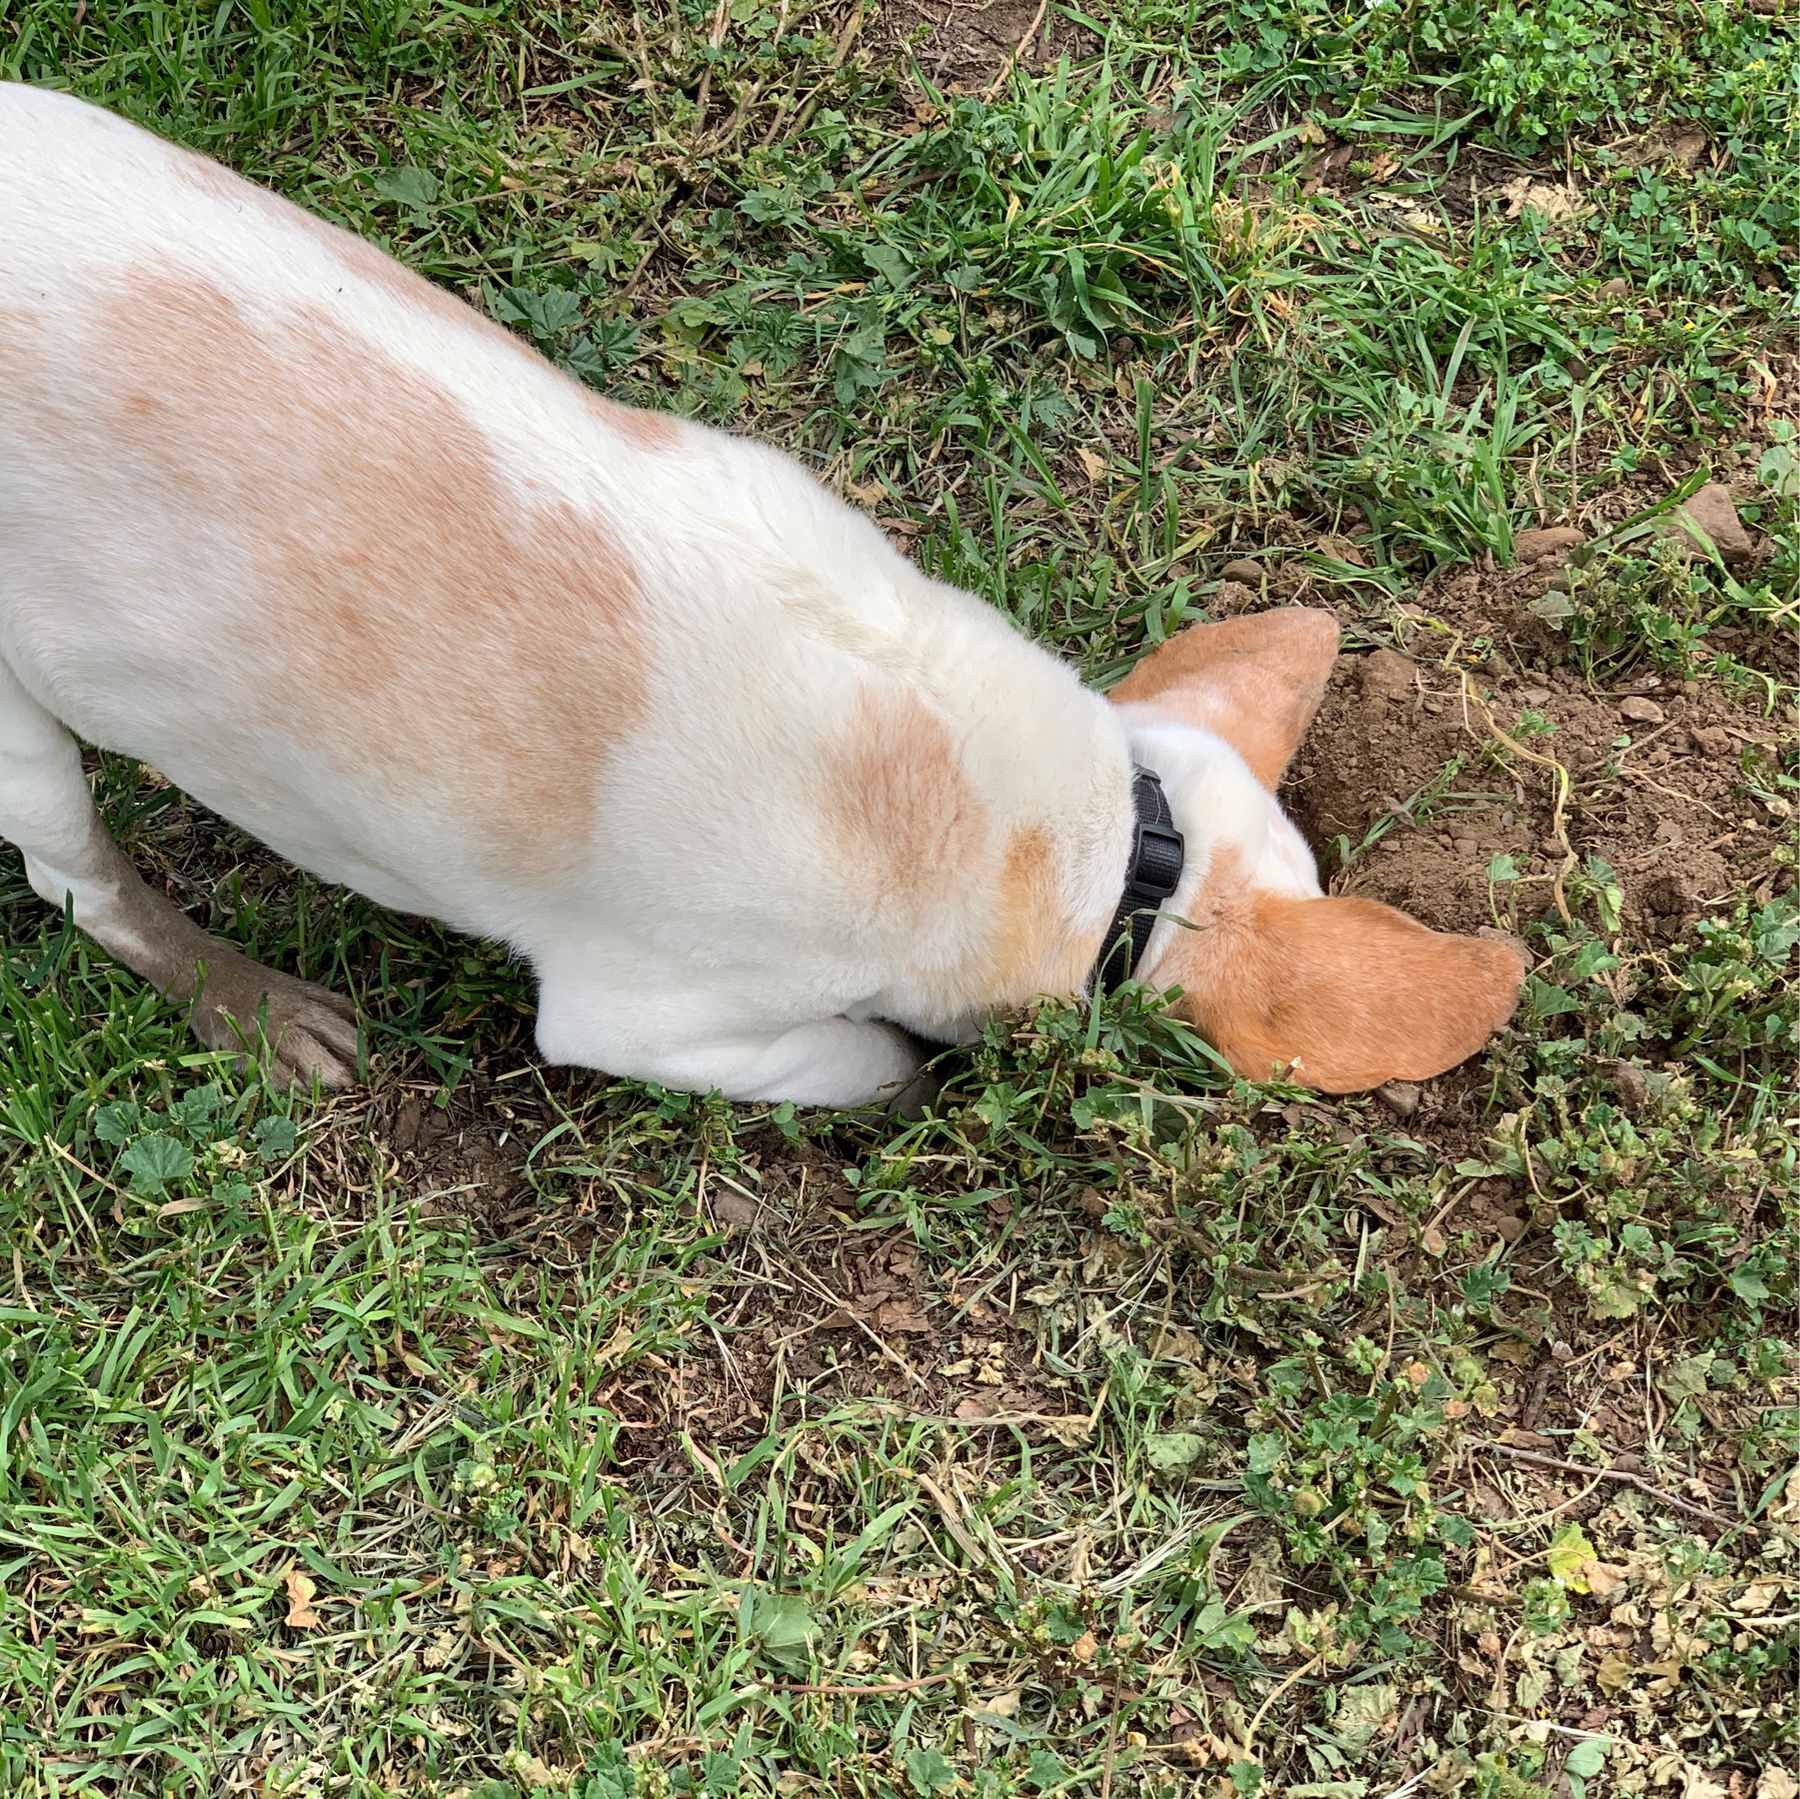 dog with head in hole he had dug